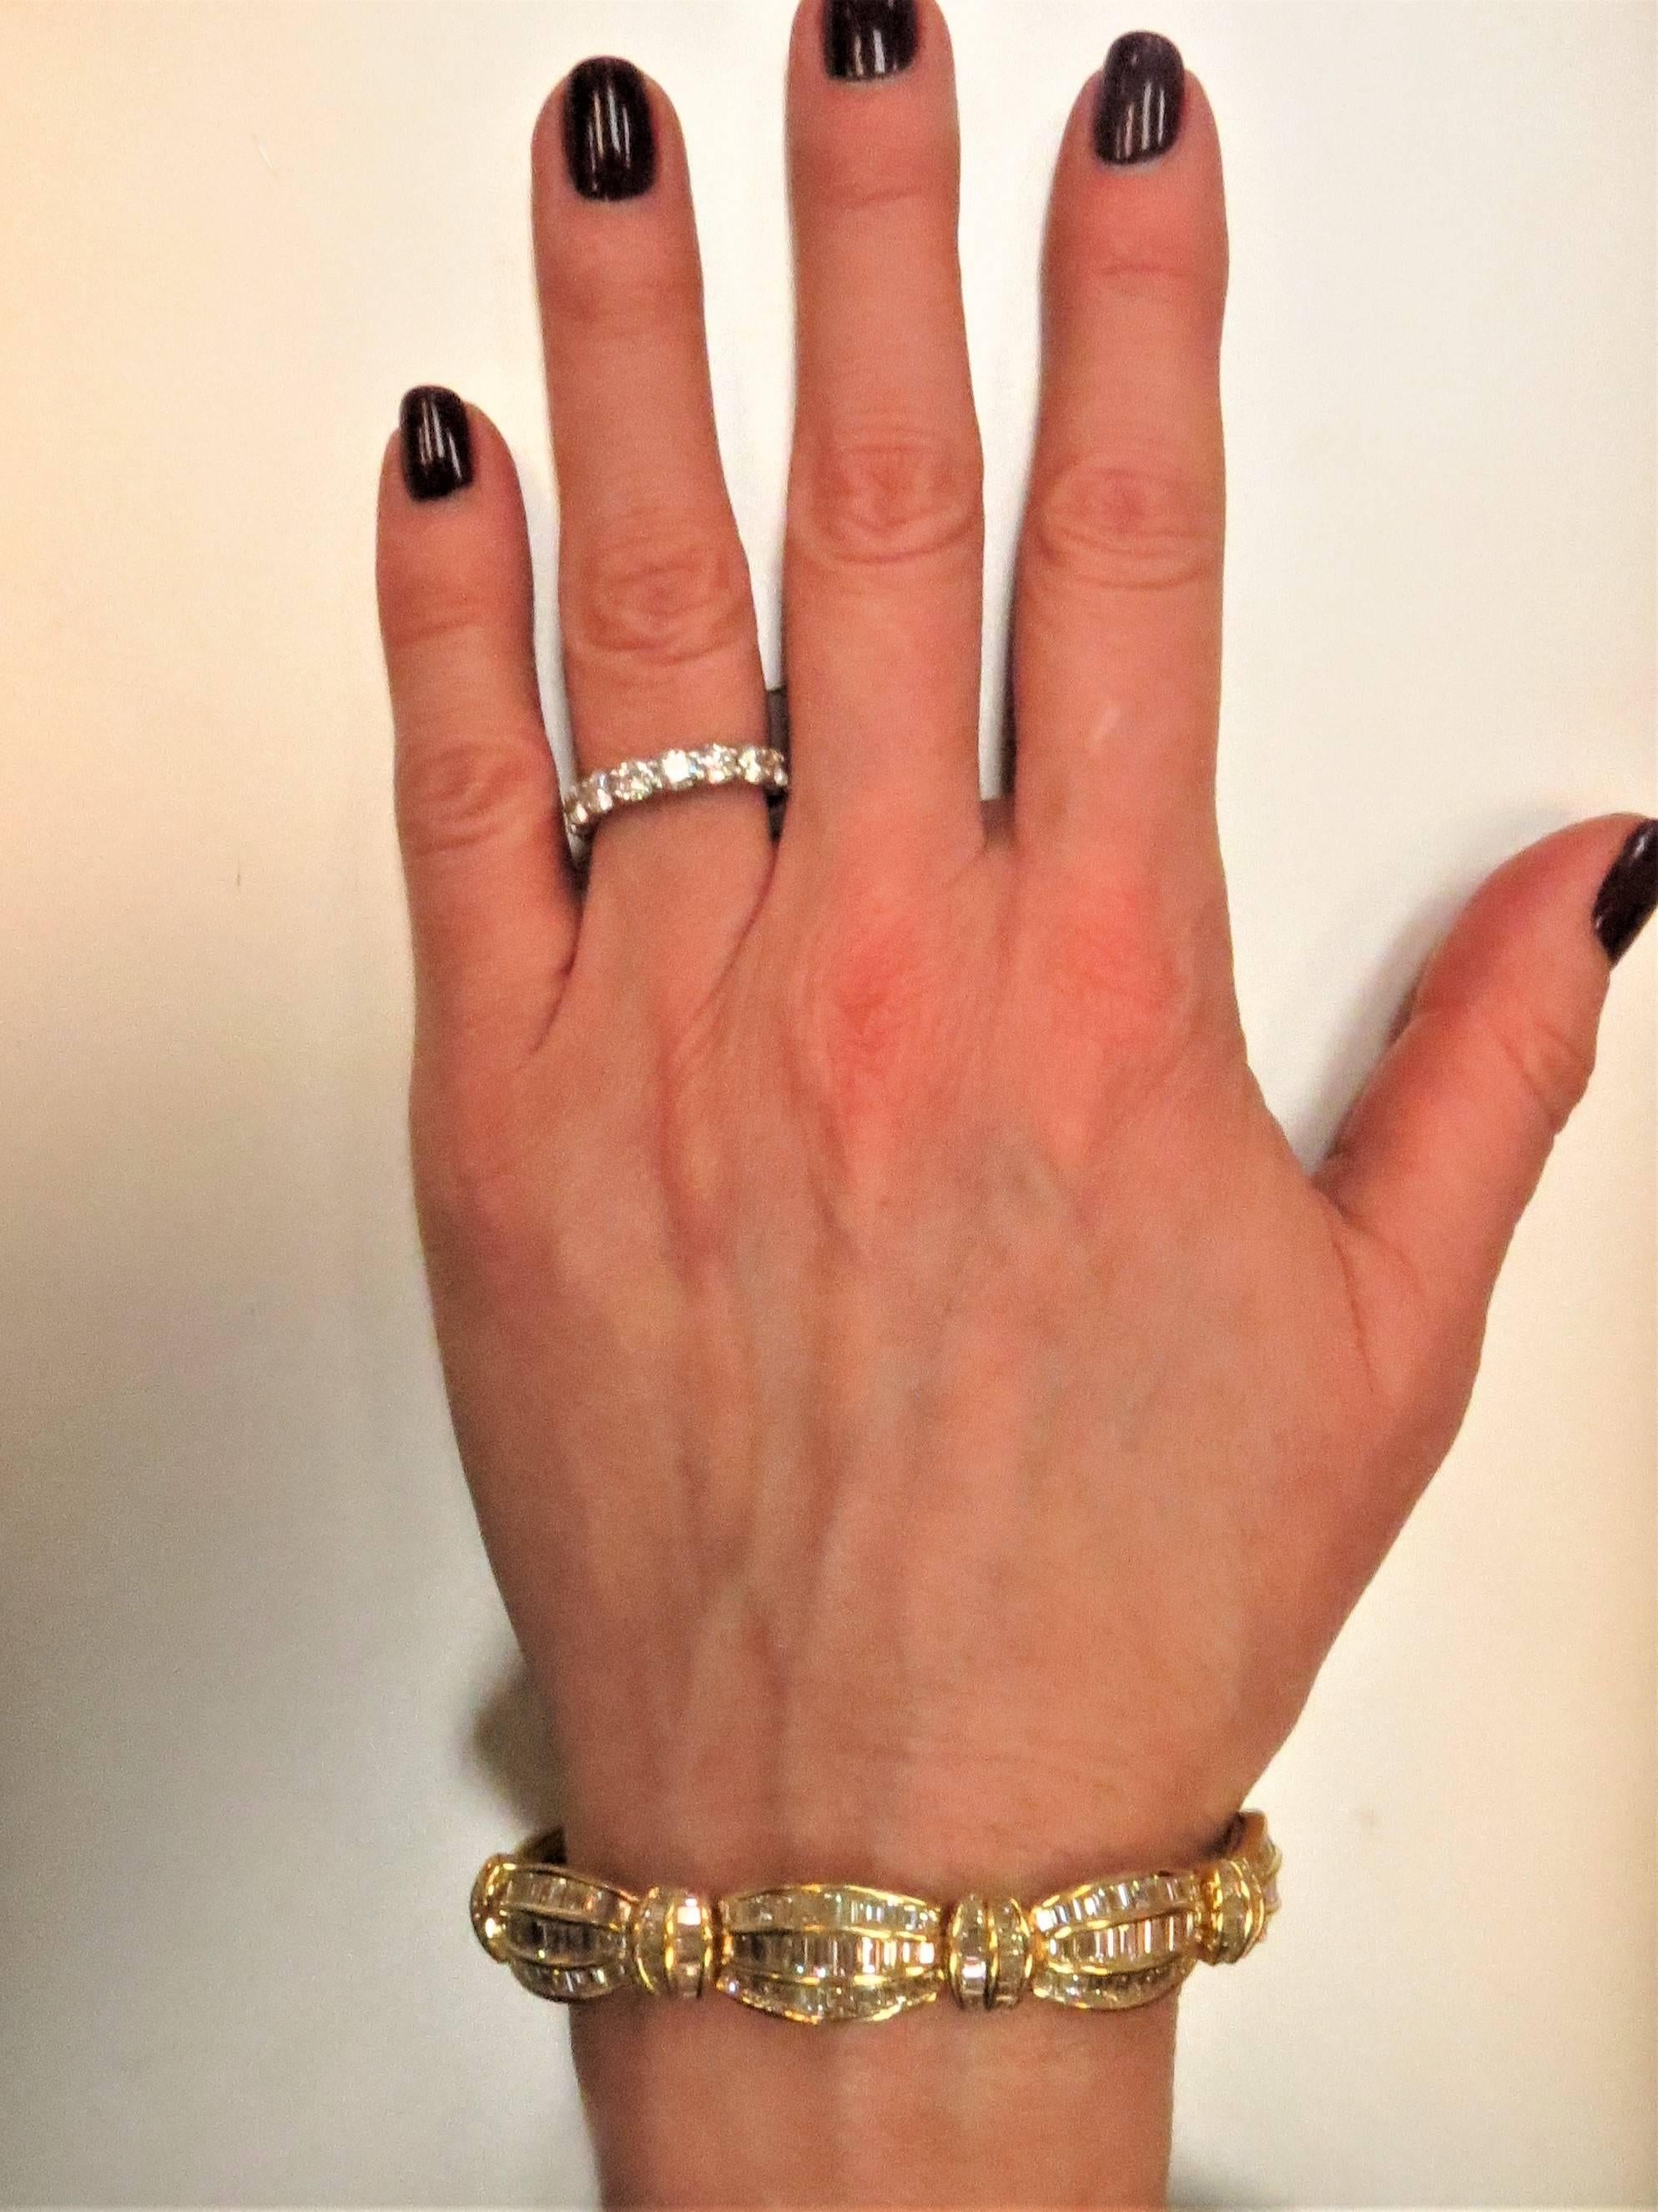 Unique Picchiotti 18K yellow gold bracelet, set with 315 baguette diamonds weighing 16.82cts, channel set, F-G color, VS clarity